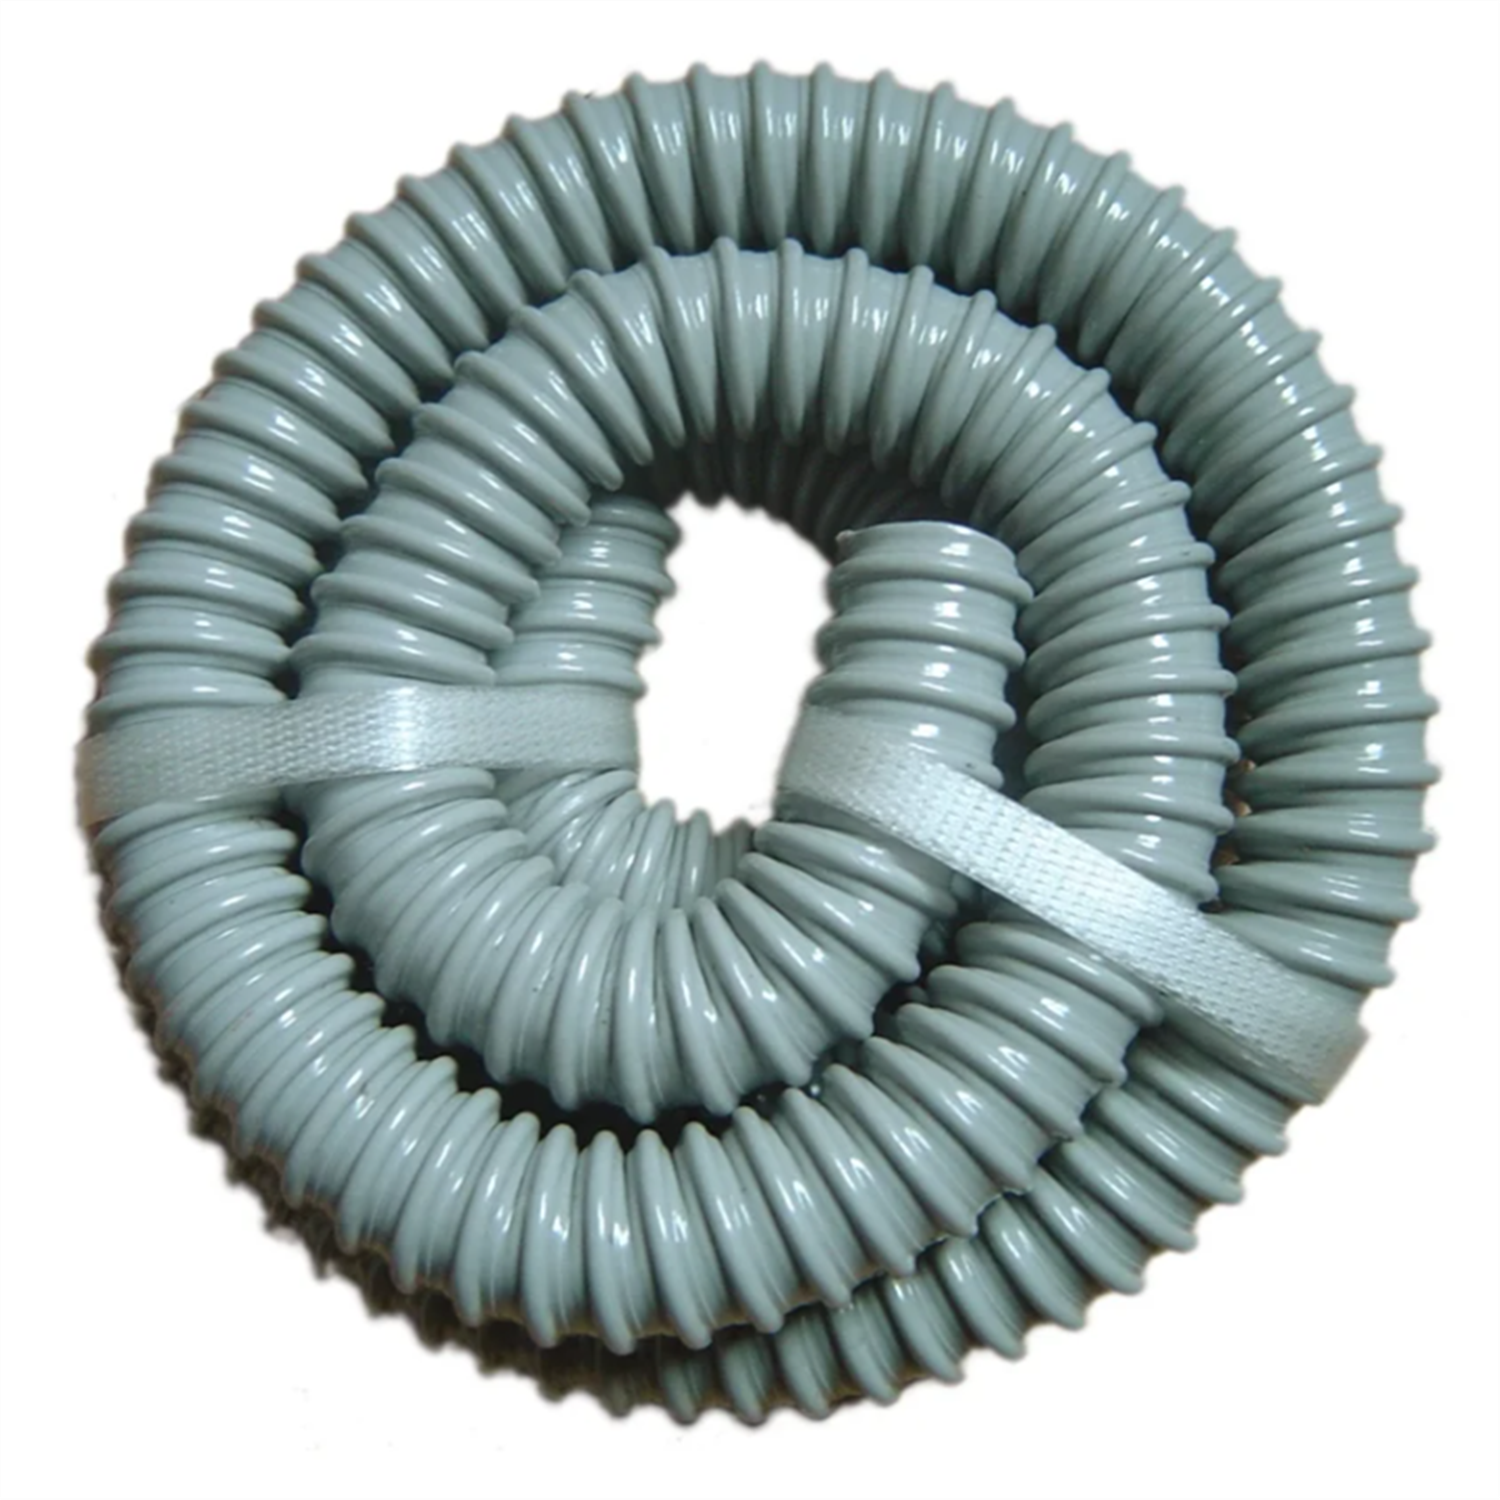 Оболочка кабеля из поливинилхлоридного пластиката. Шланг 18400 PVC-St p. Пластикаты для шлангов. PVC flexible Pipe. Шланг из пенополистирола.